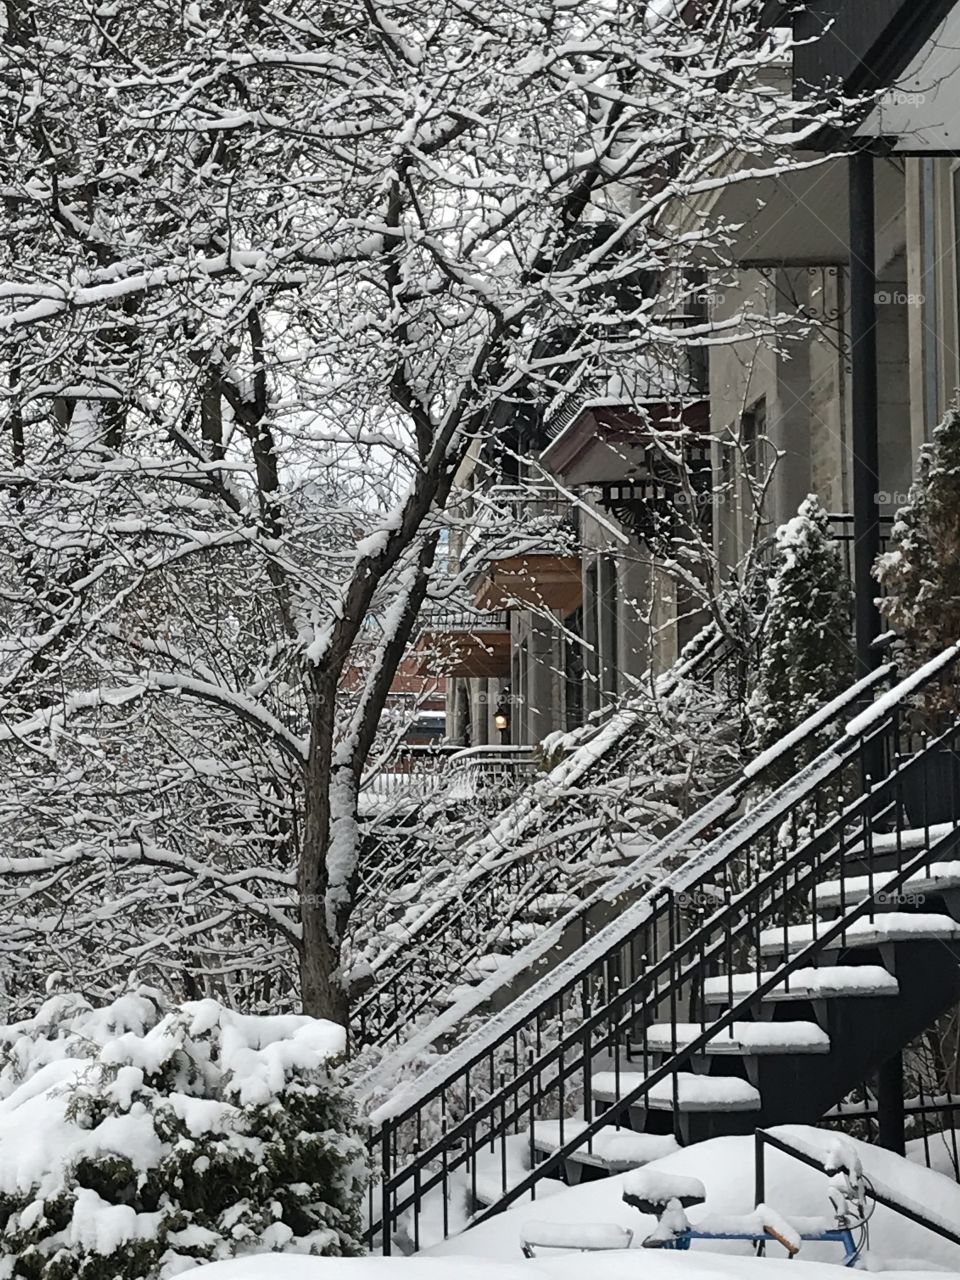 Winter wonderland in the Plateau neighborhood in Montreal